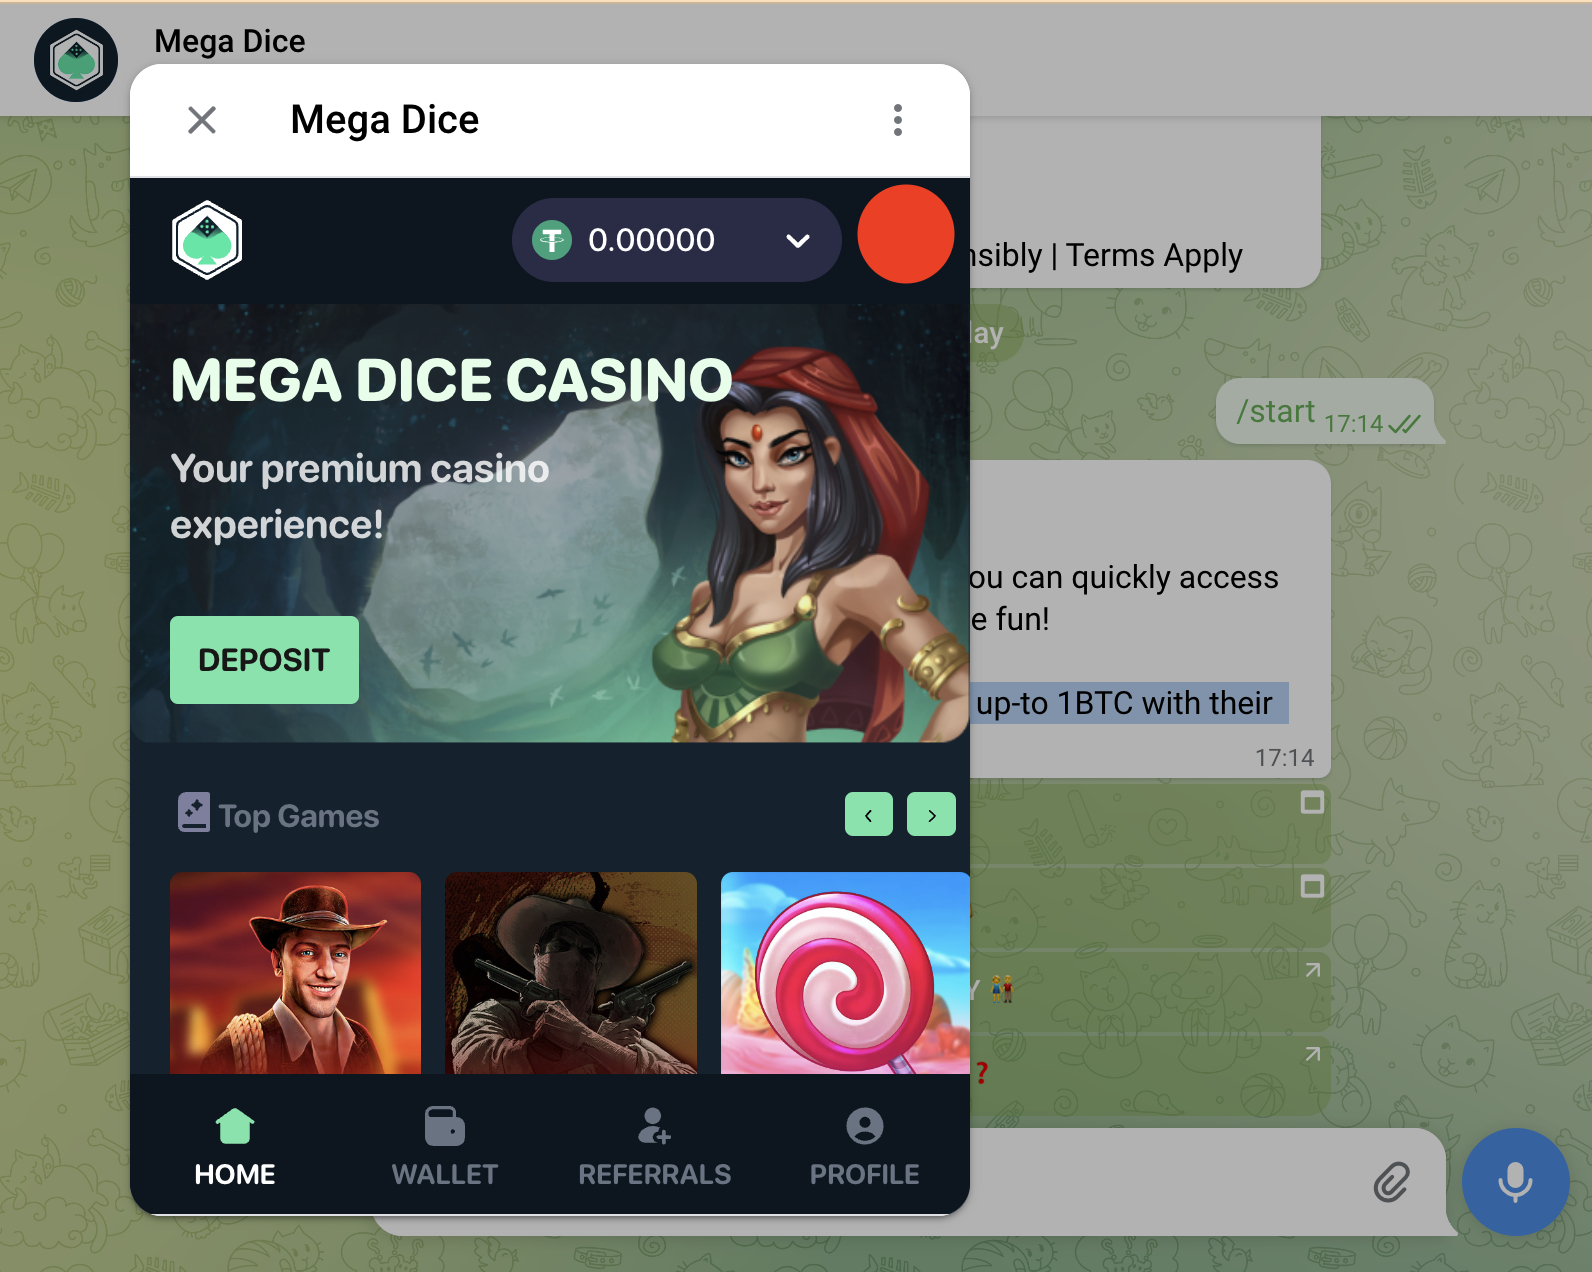 mega dice casino on Telegram - start page